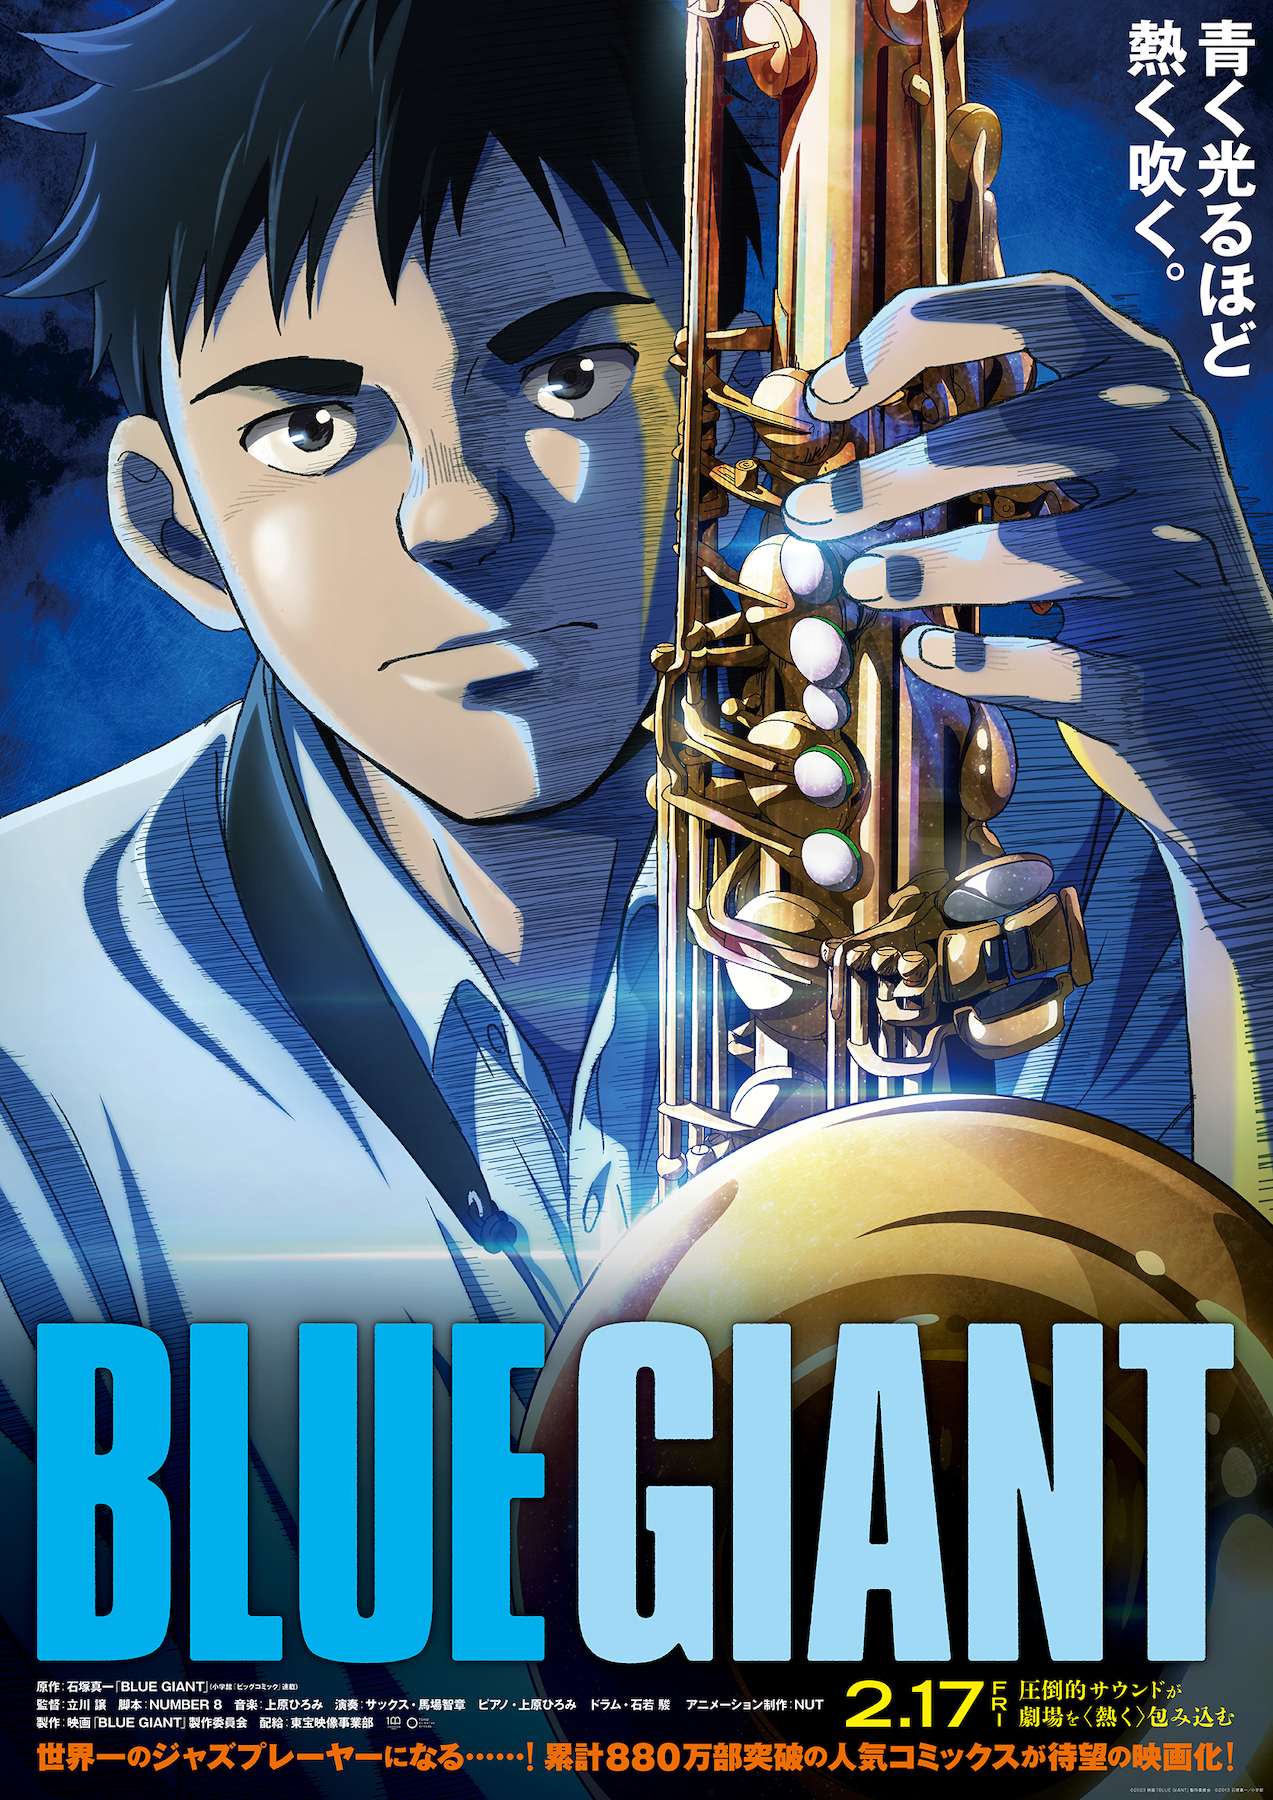 『BLUE GIANT』